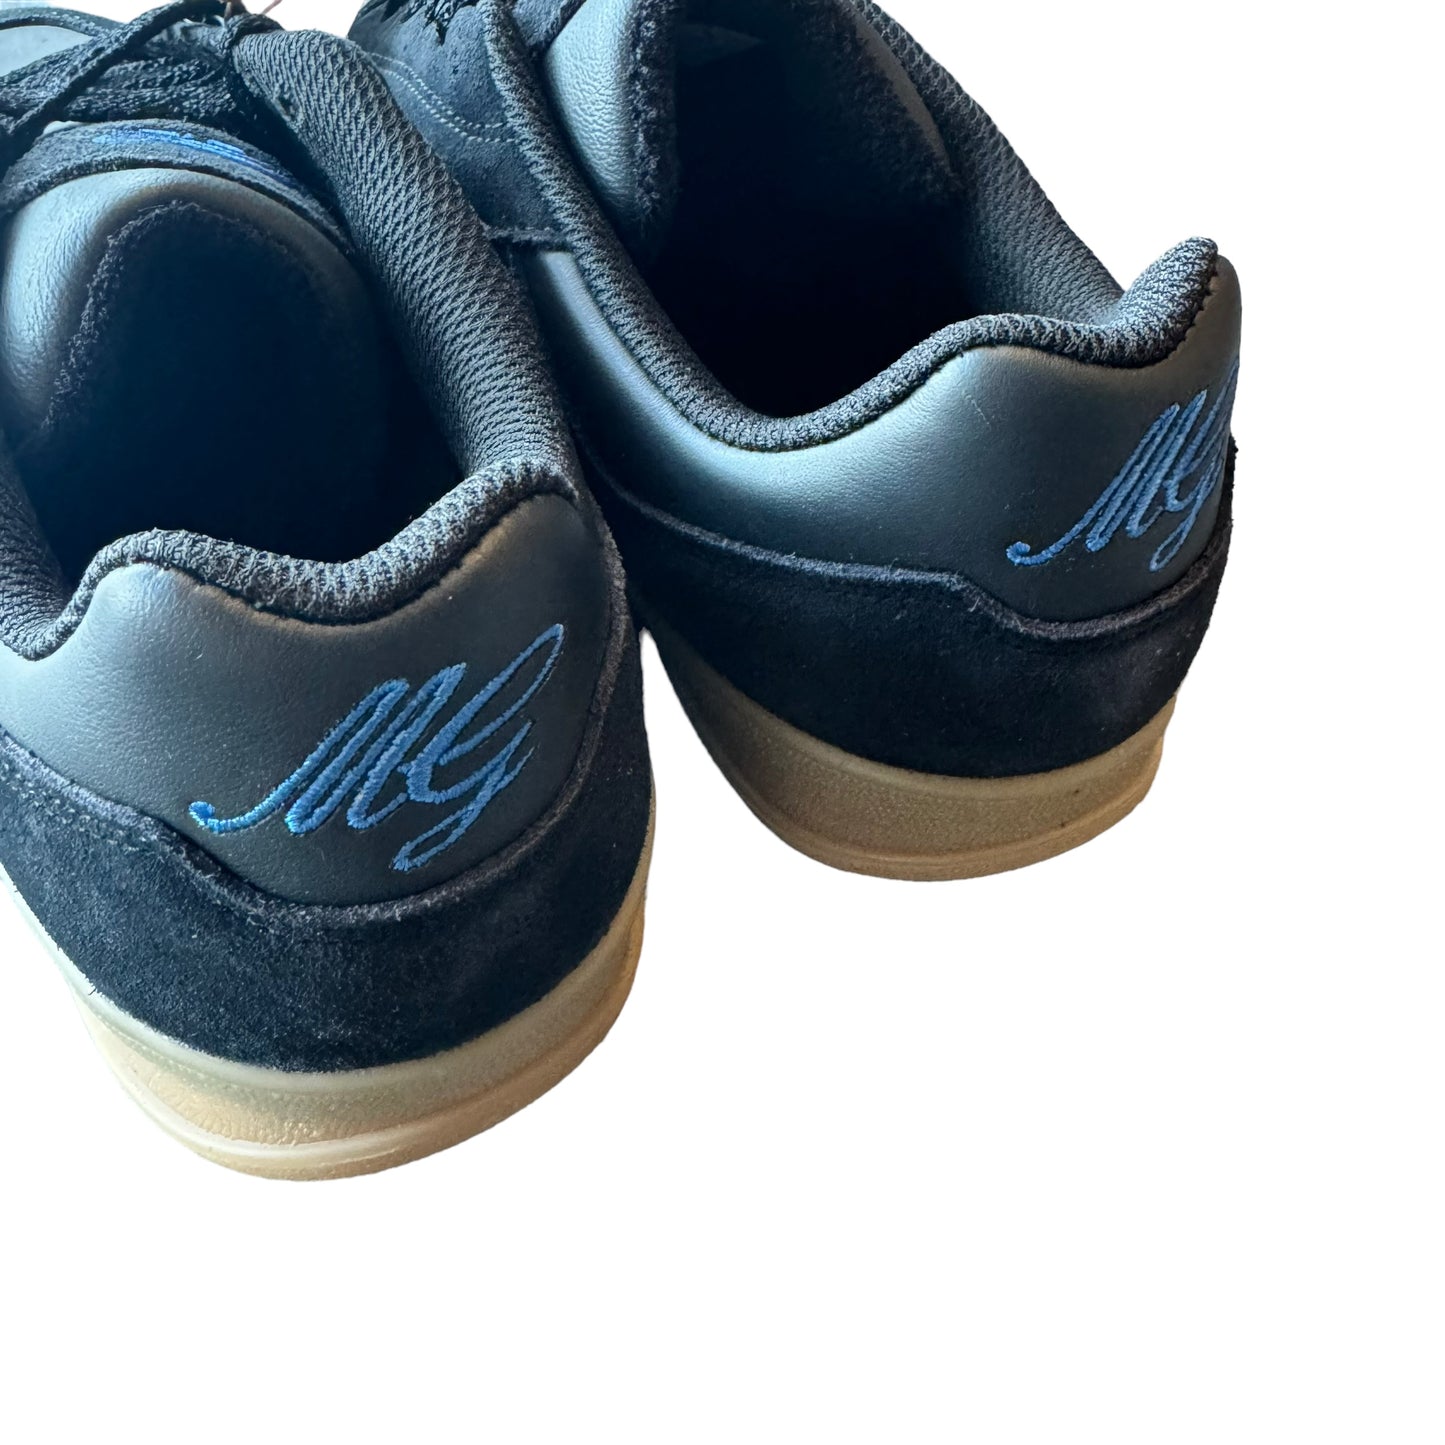 Adidas Skateboarding Aloha Super Core Black Carbon Blue Bird Shoes